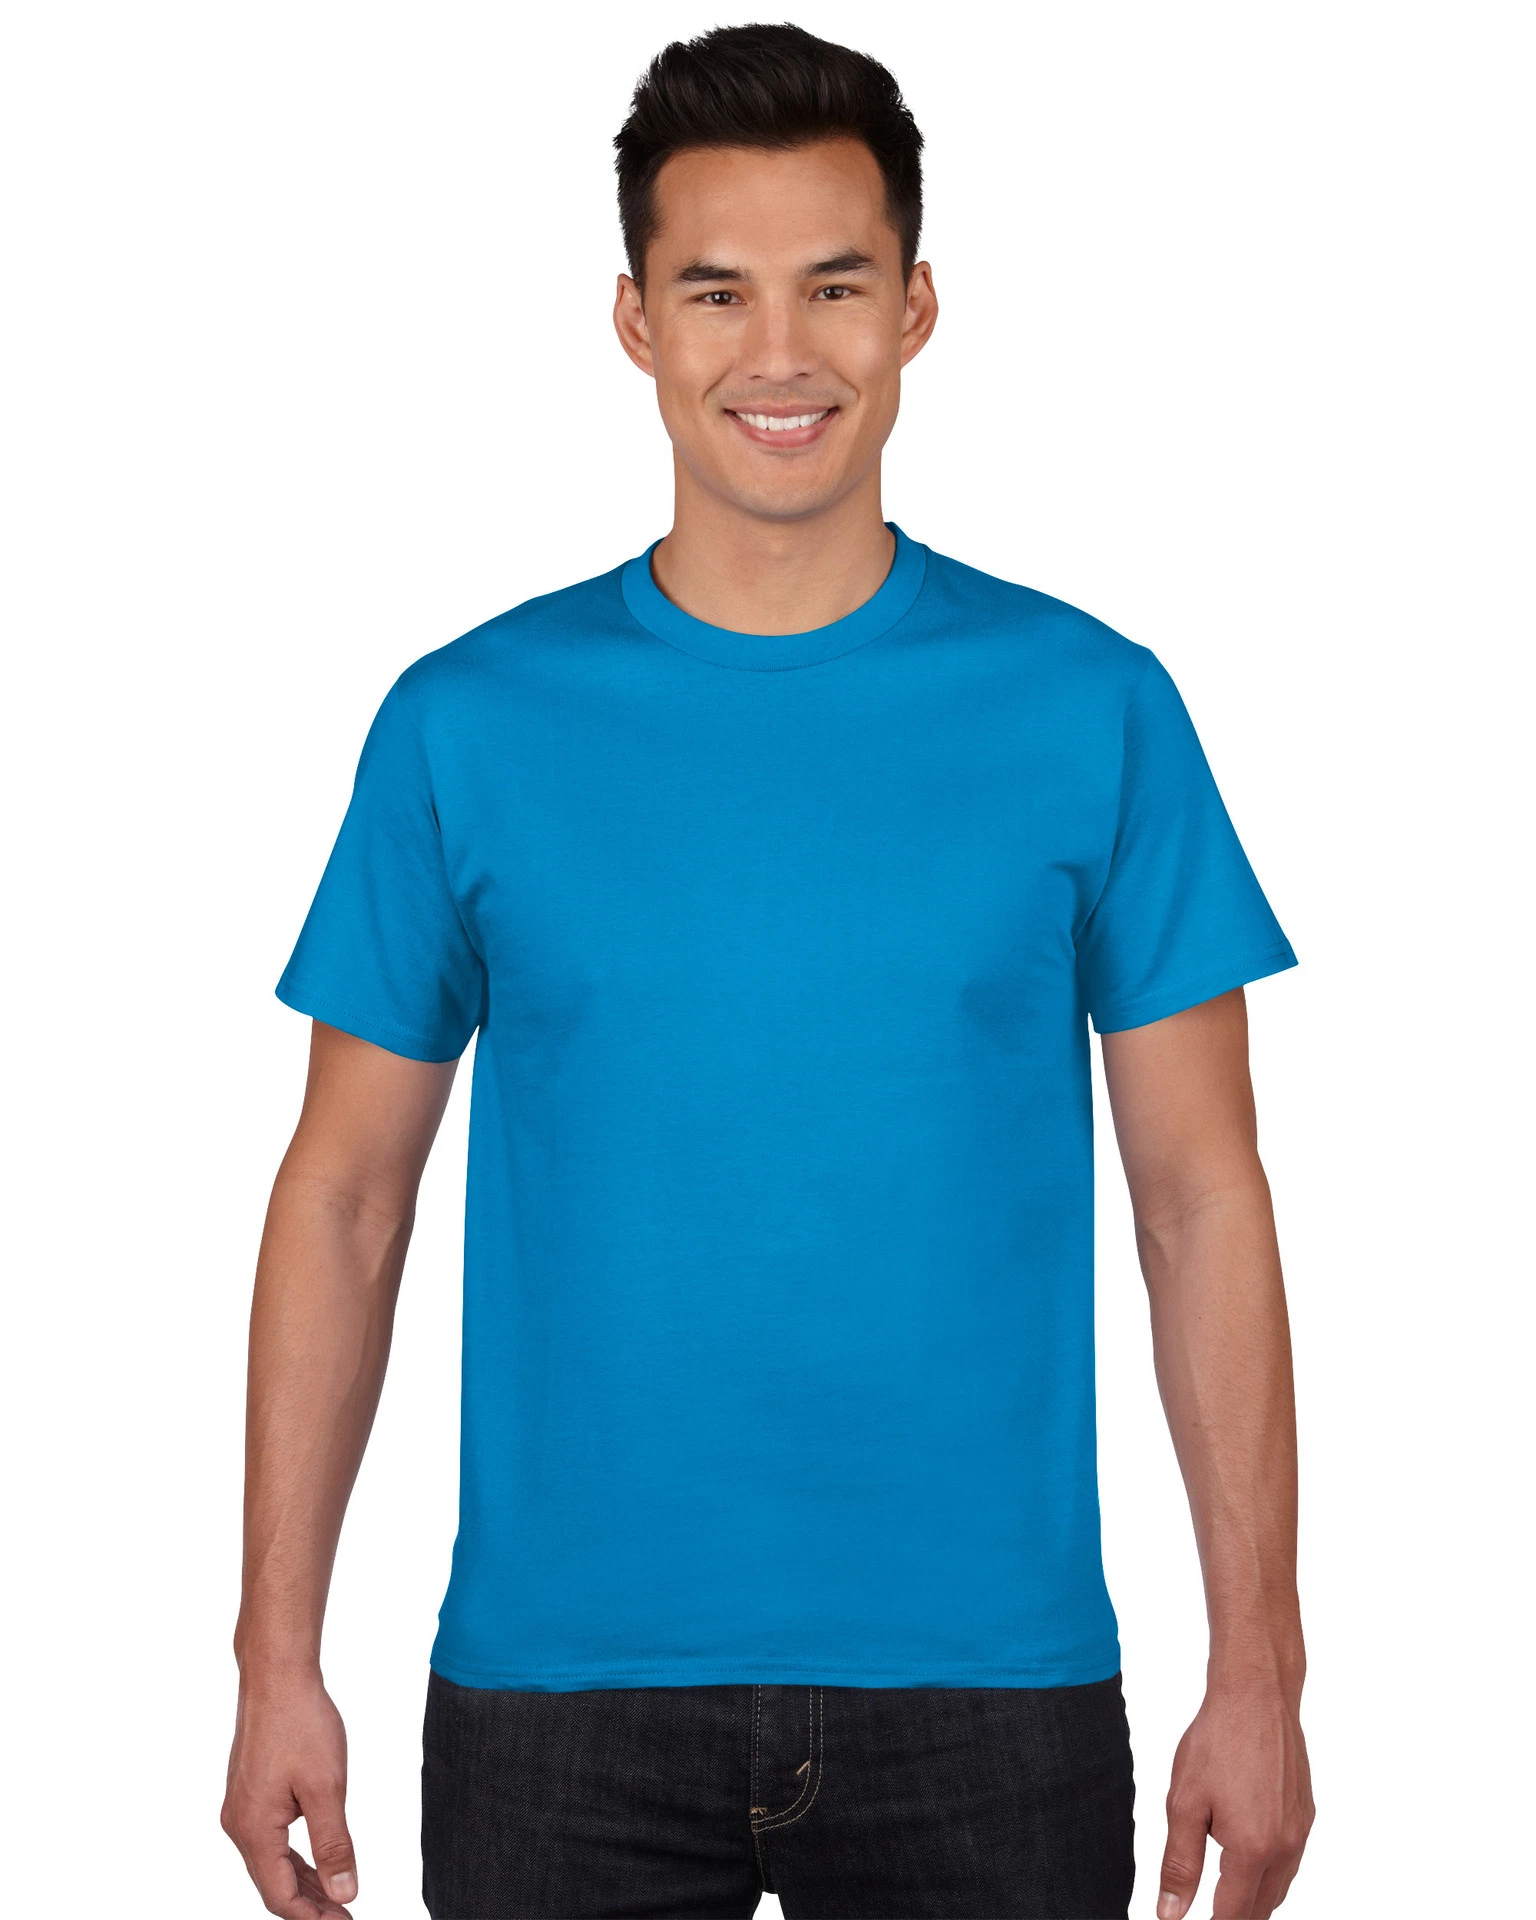 Wholesale Solid Color Cotton Blank T-Shirt Printing Logo Class Uniform Cultural Shirt Advertising Shirt